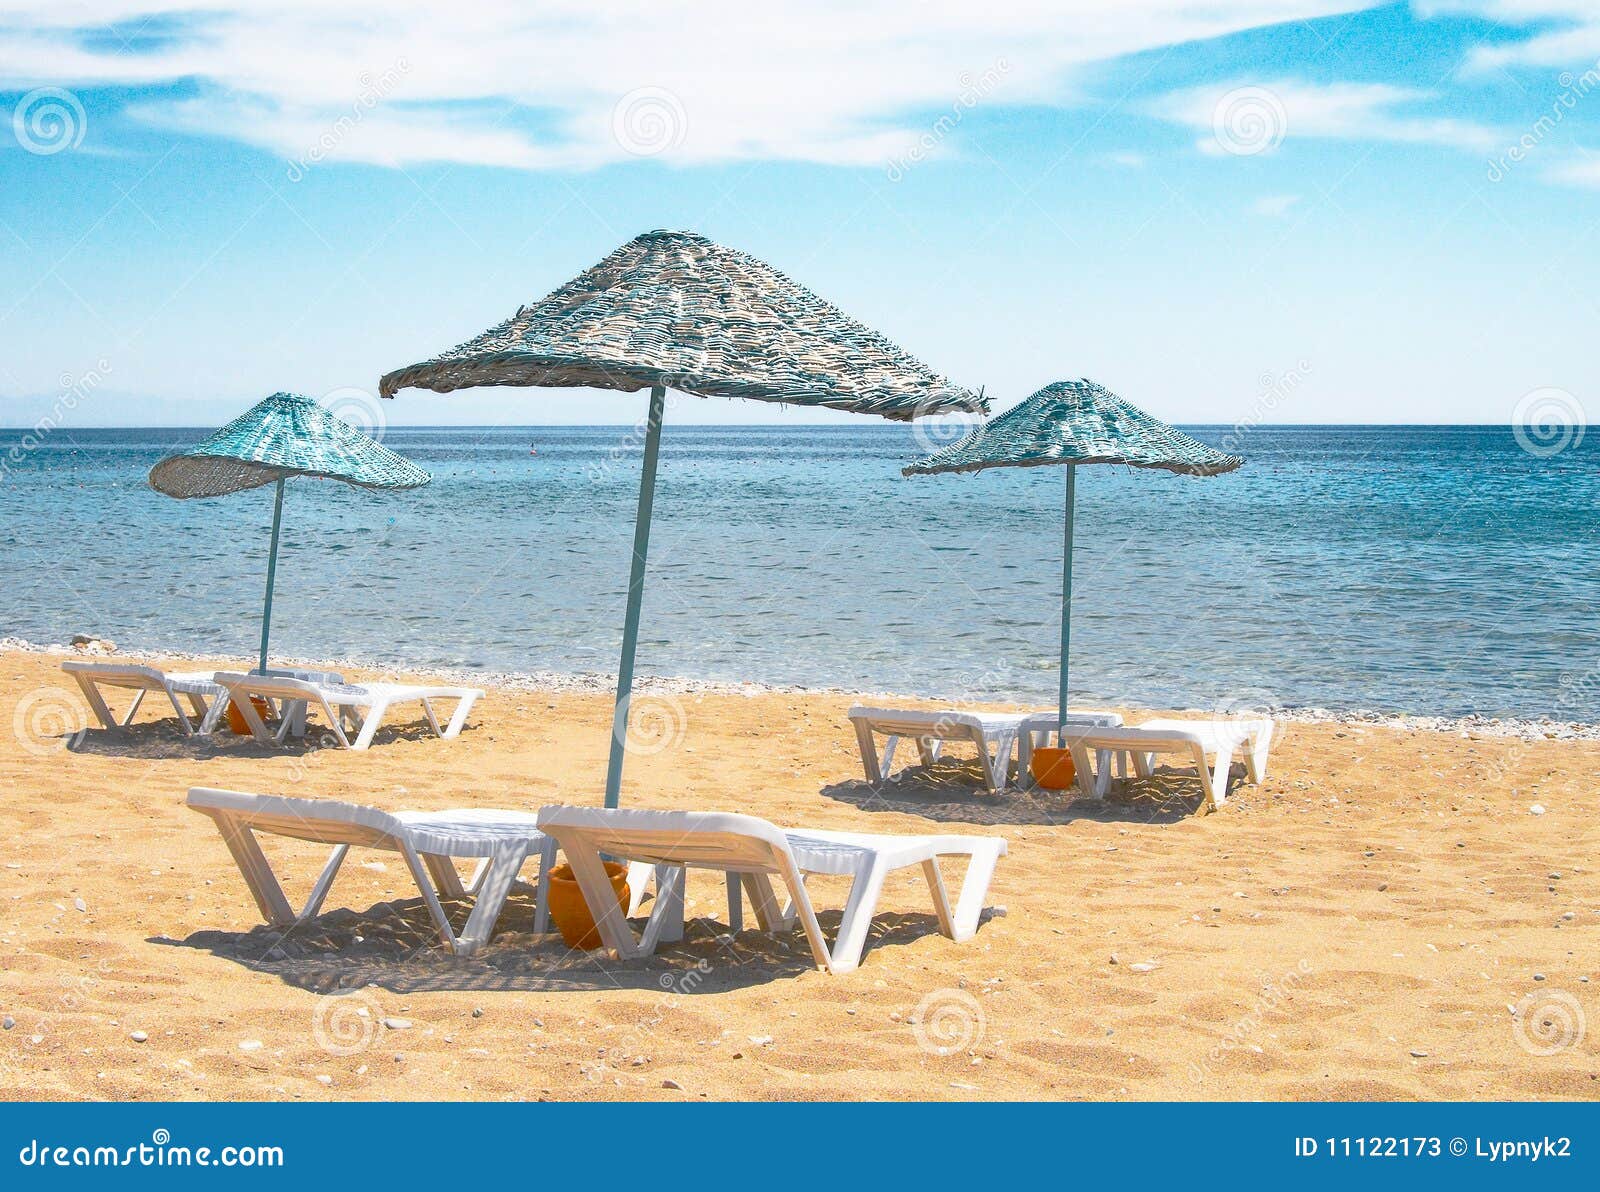 Summertime in the Turkish Resort. Stock Image - Image of idyllic ...